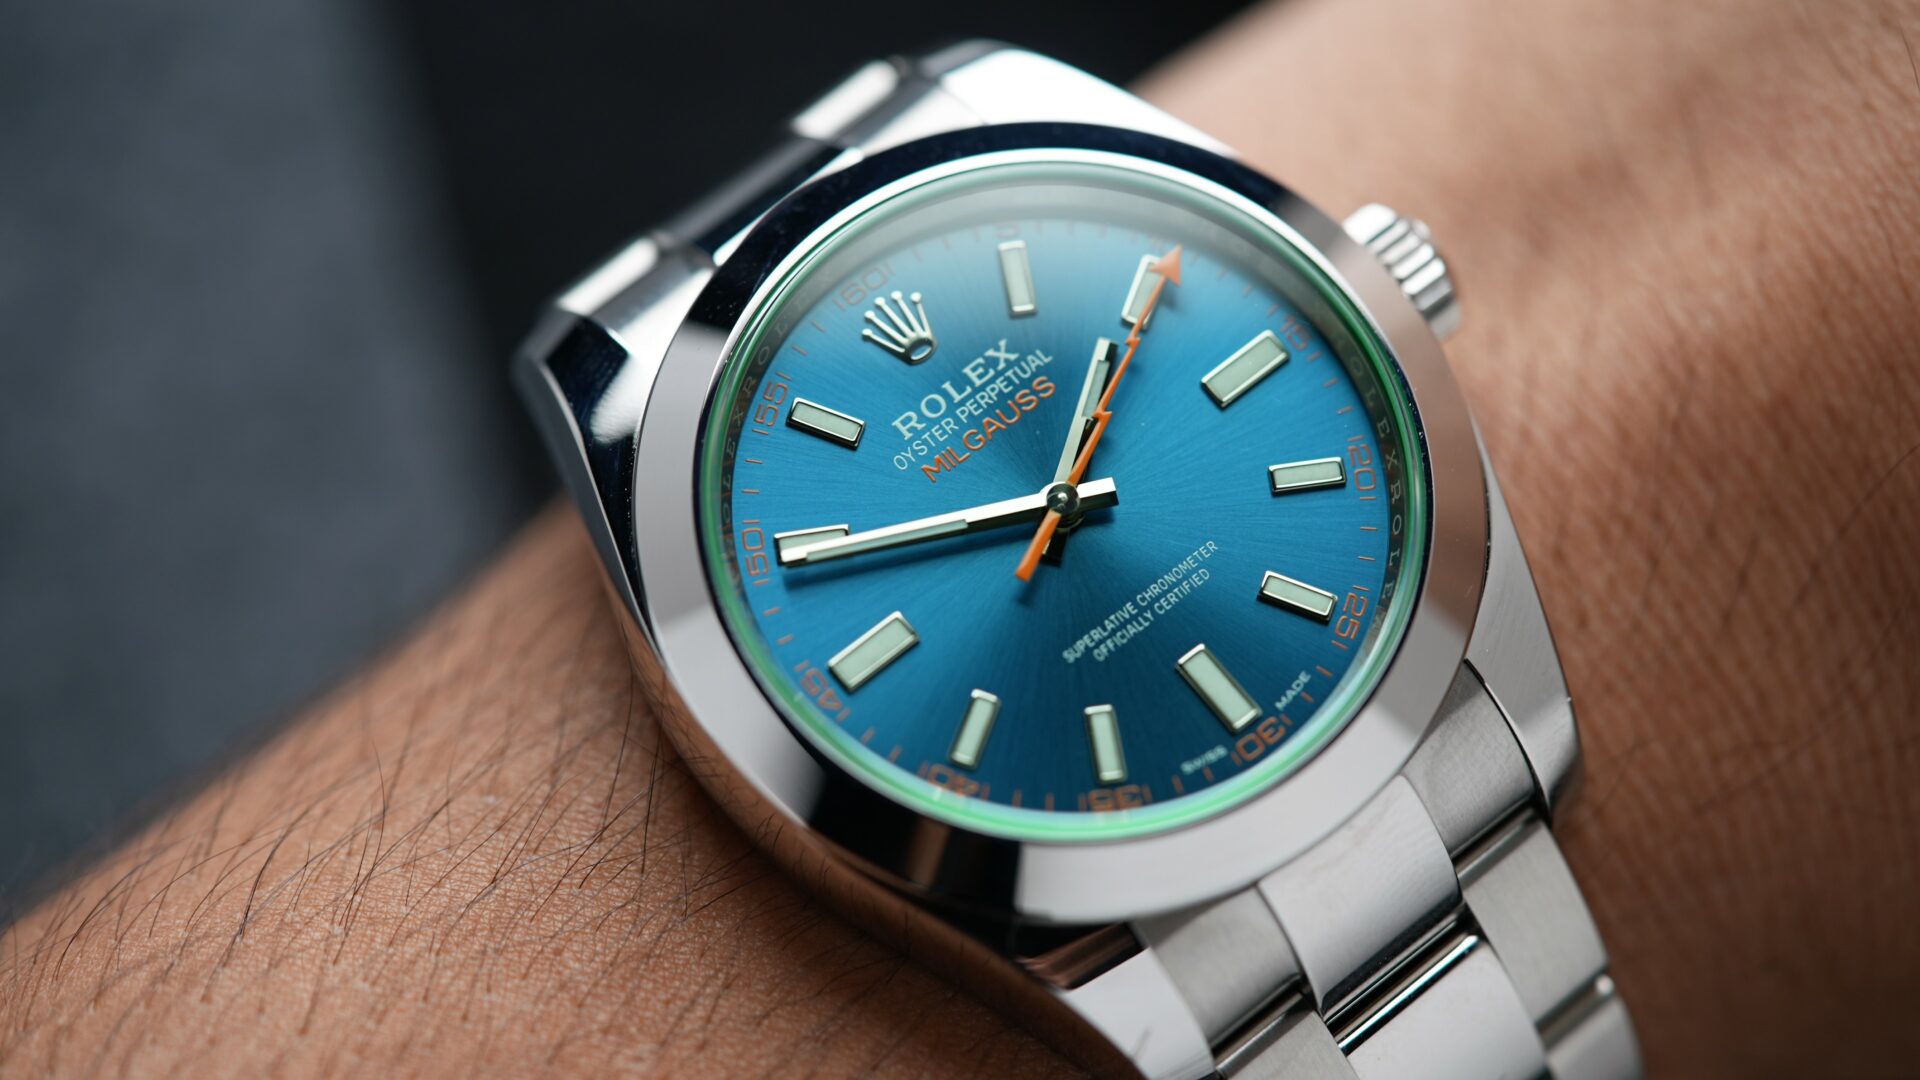 Rolex Milgauss Z Blue UNWORN 116400GV wristwatch displayed on the wrist.